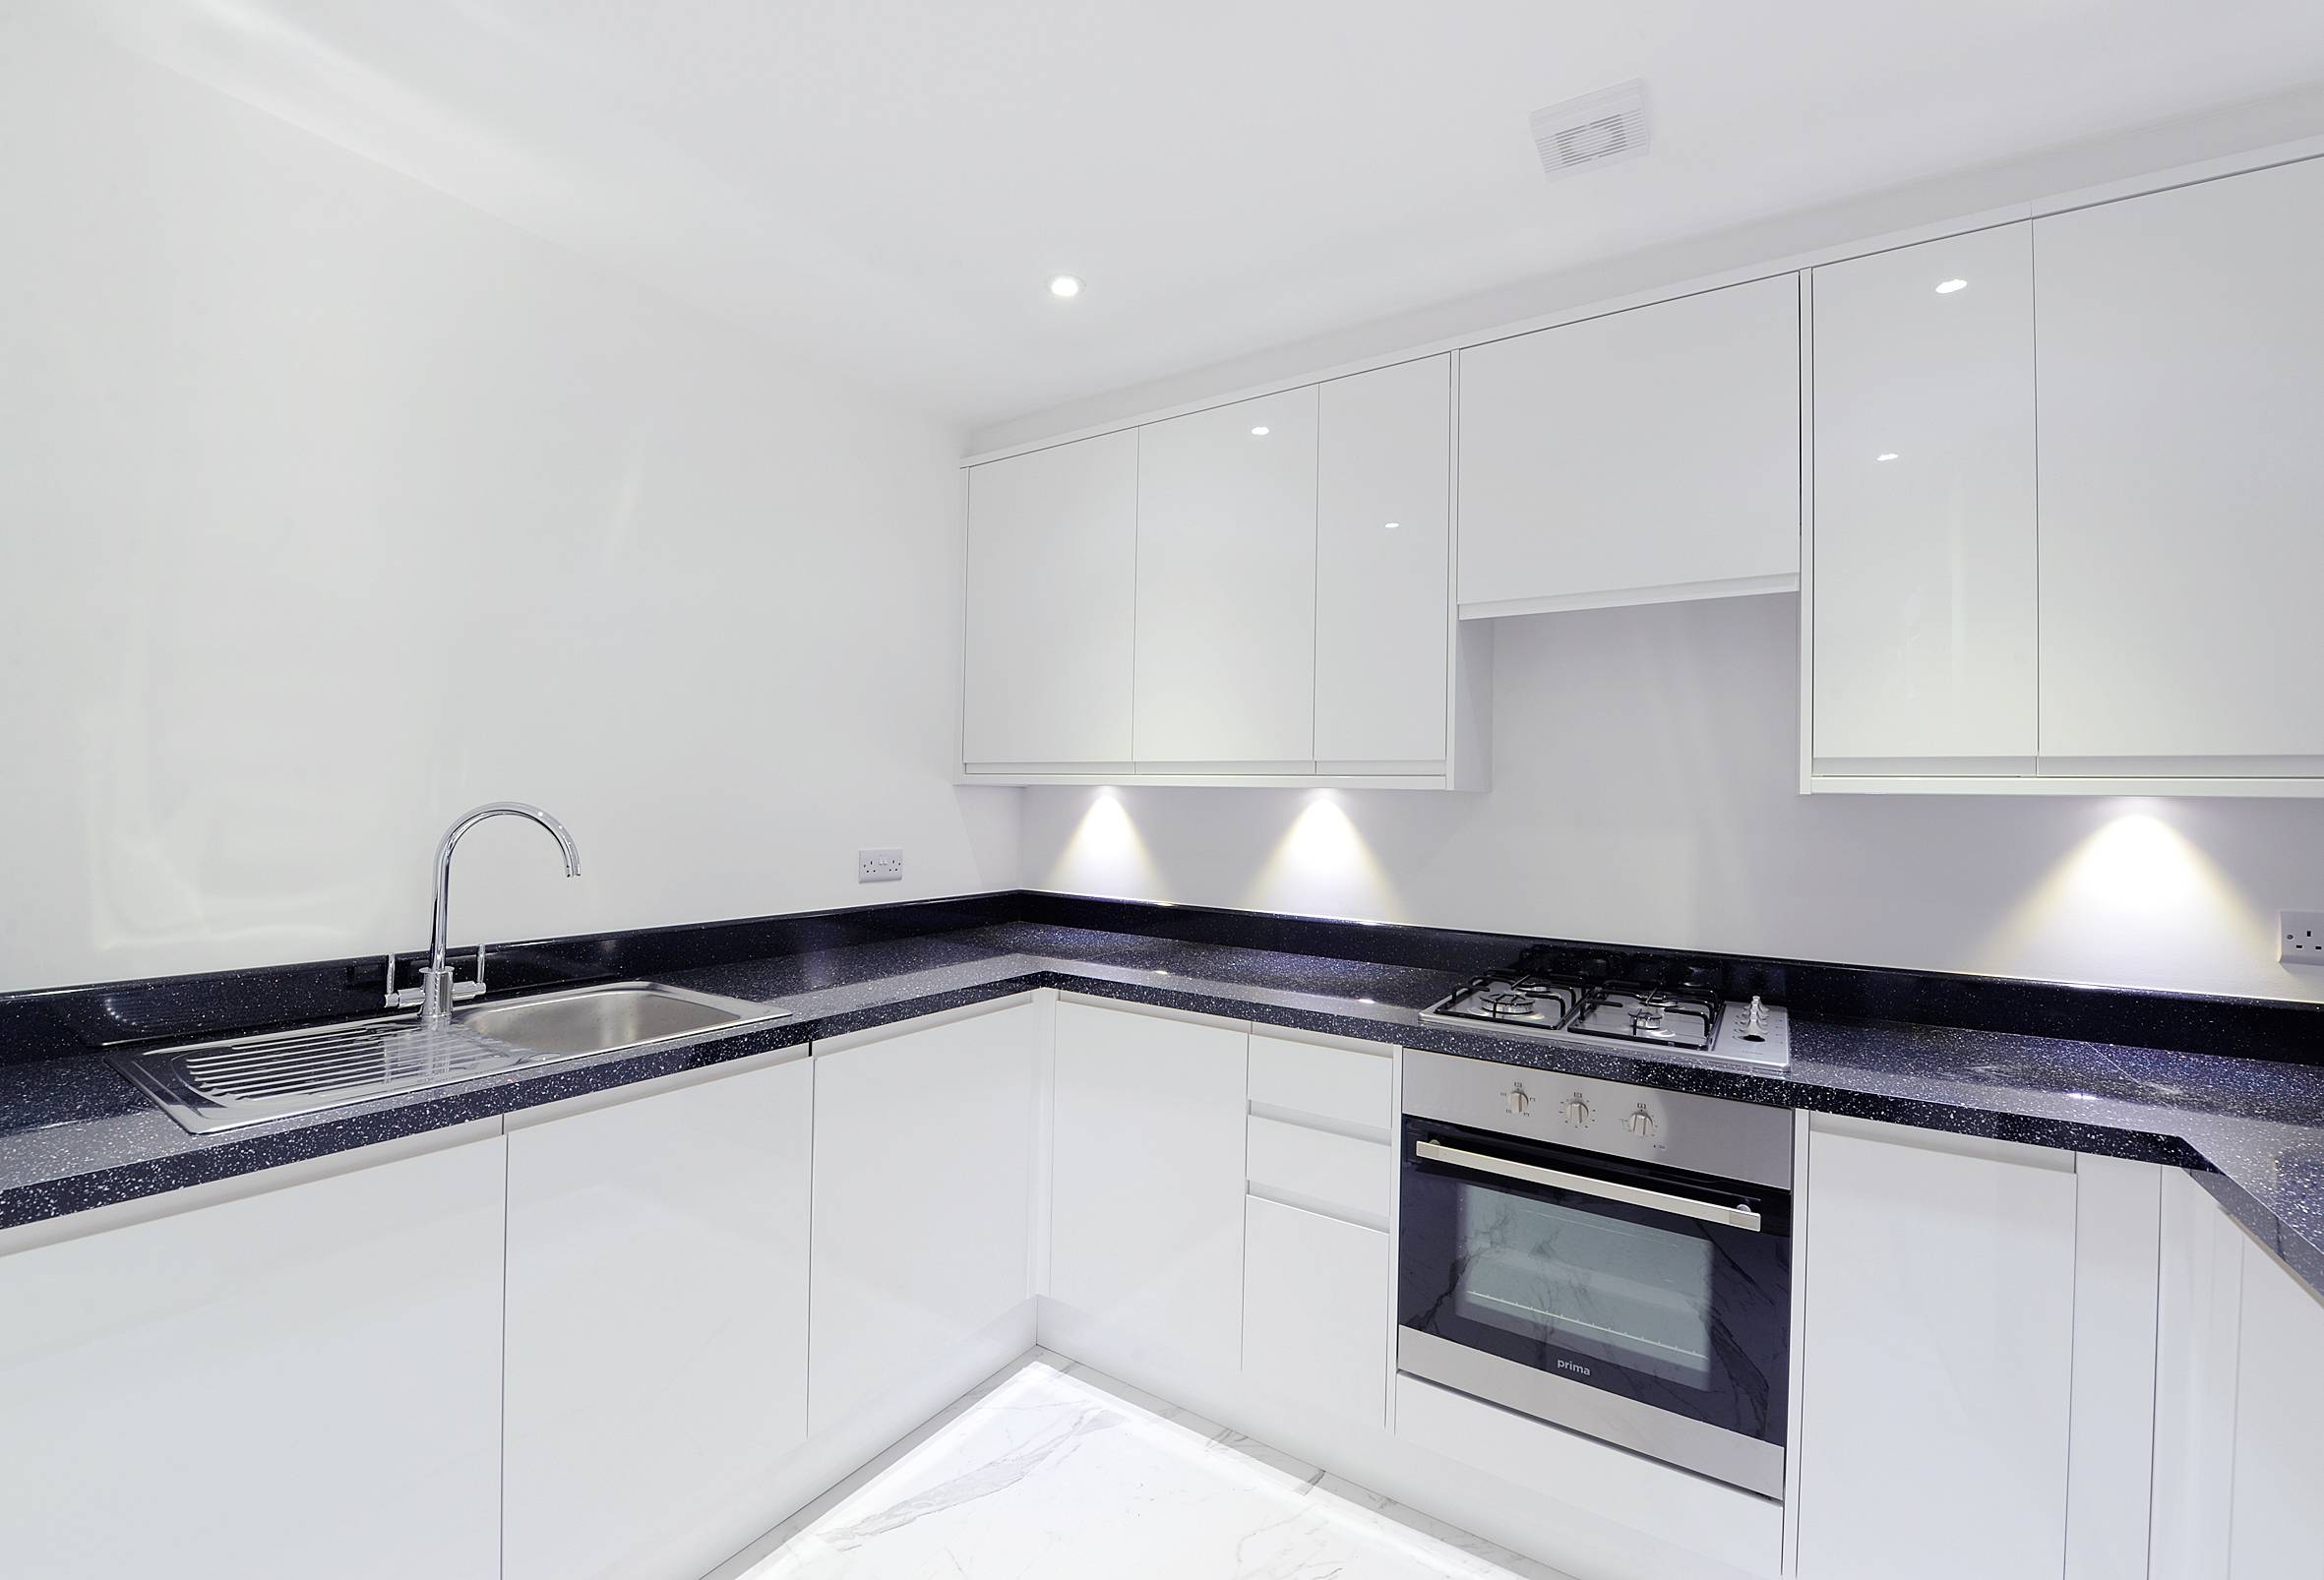 3 Bedroom Double Duplex Apartment to Rent in Kensington, London